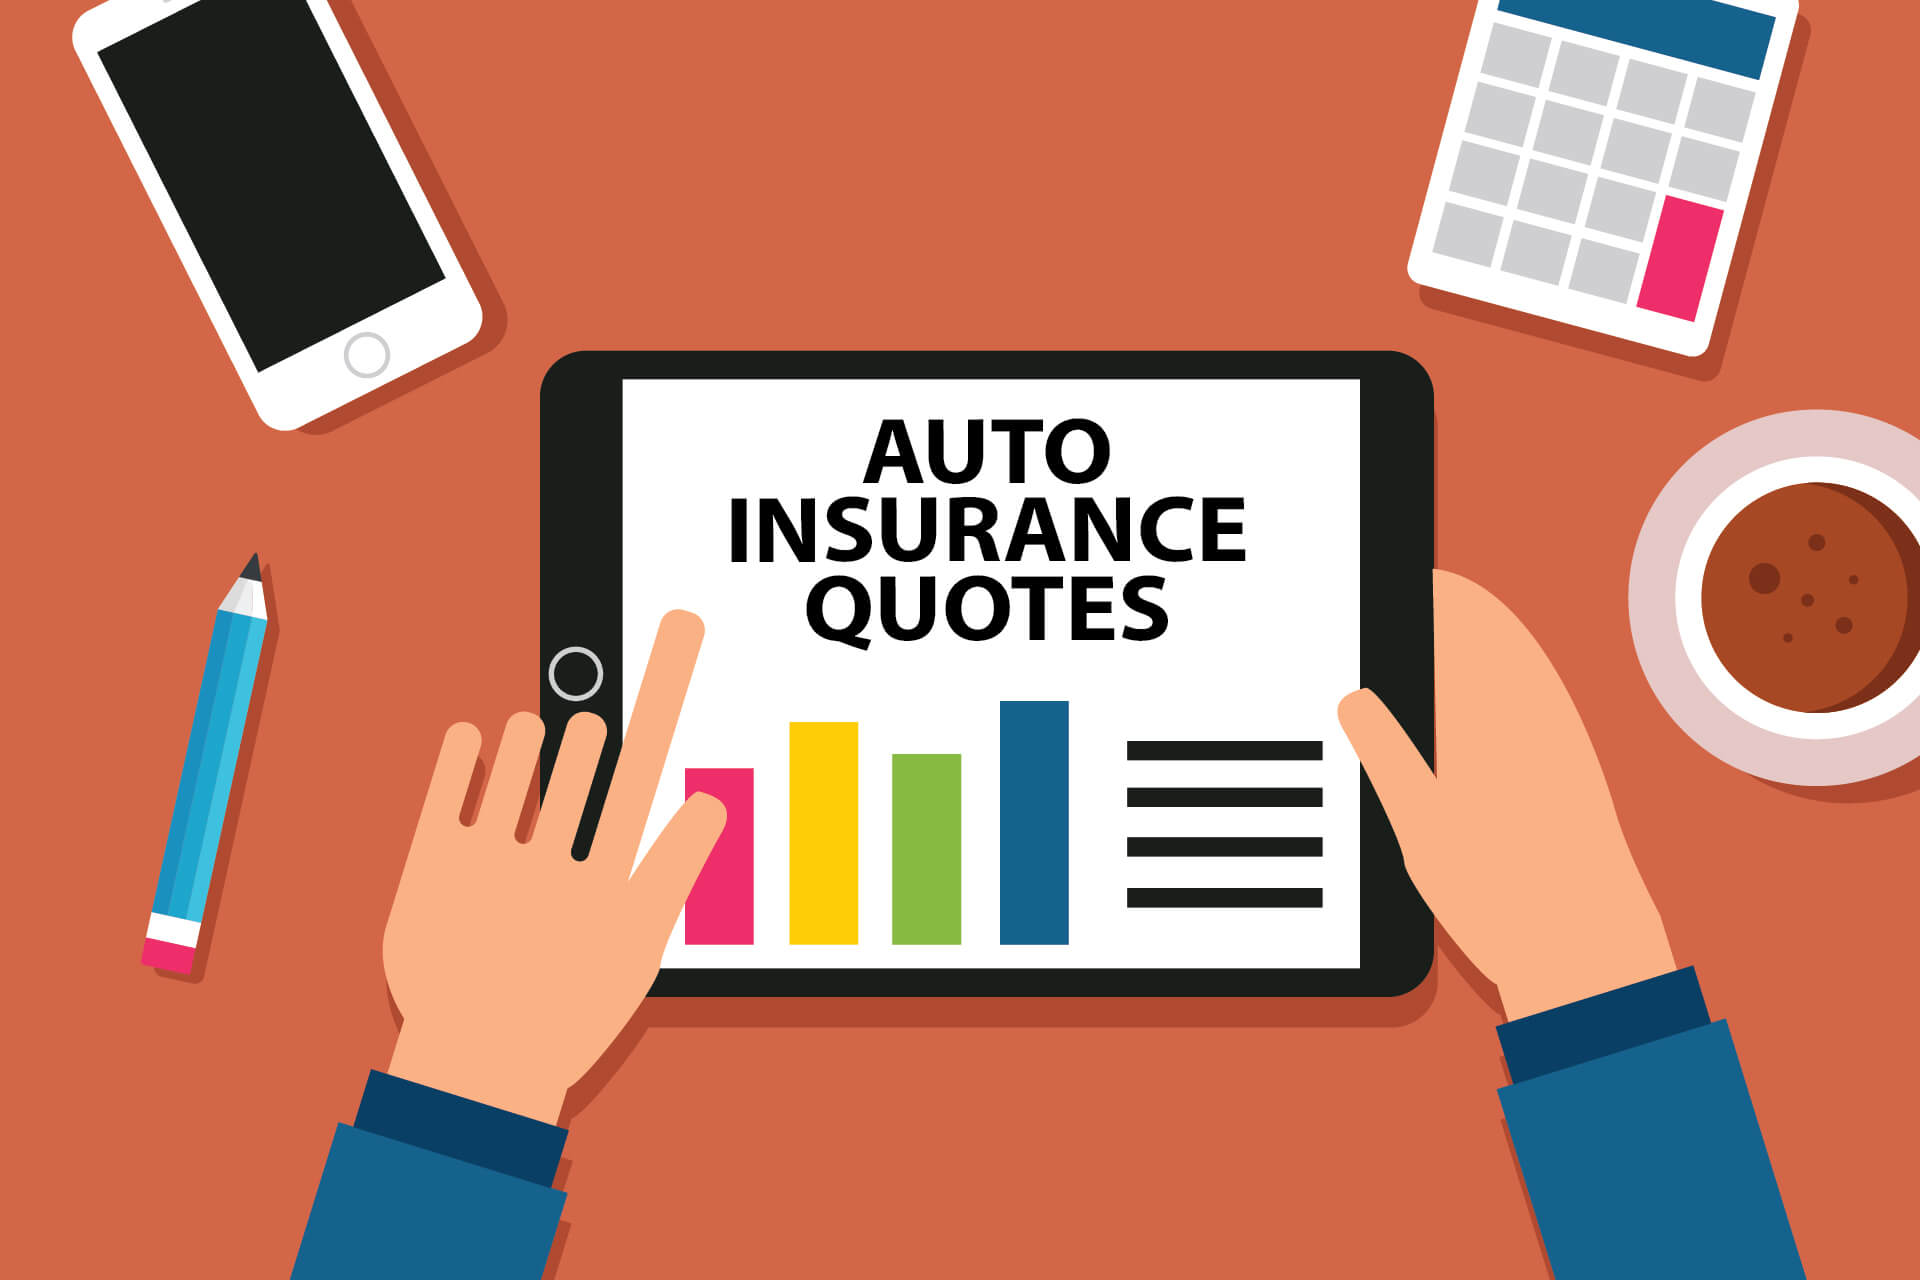 Auto insurance quotes desktop free image download